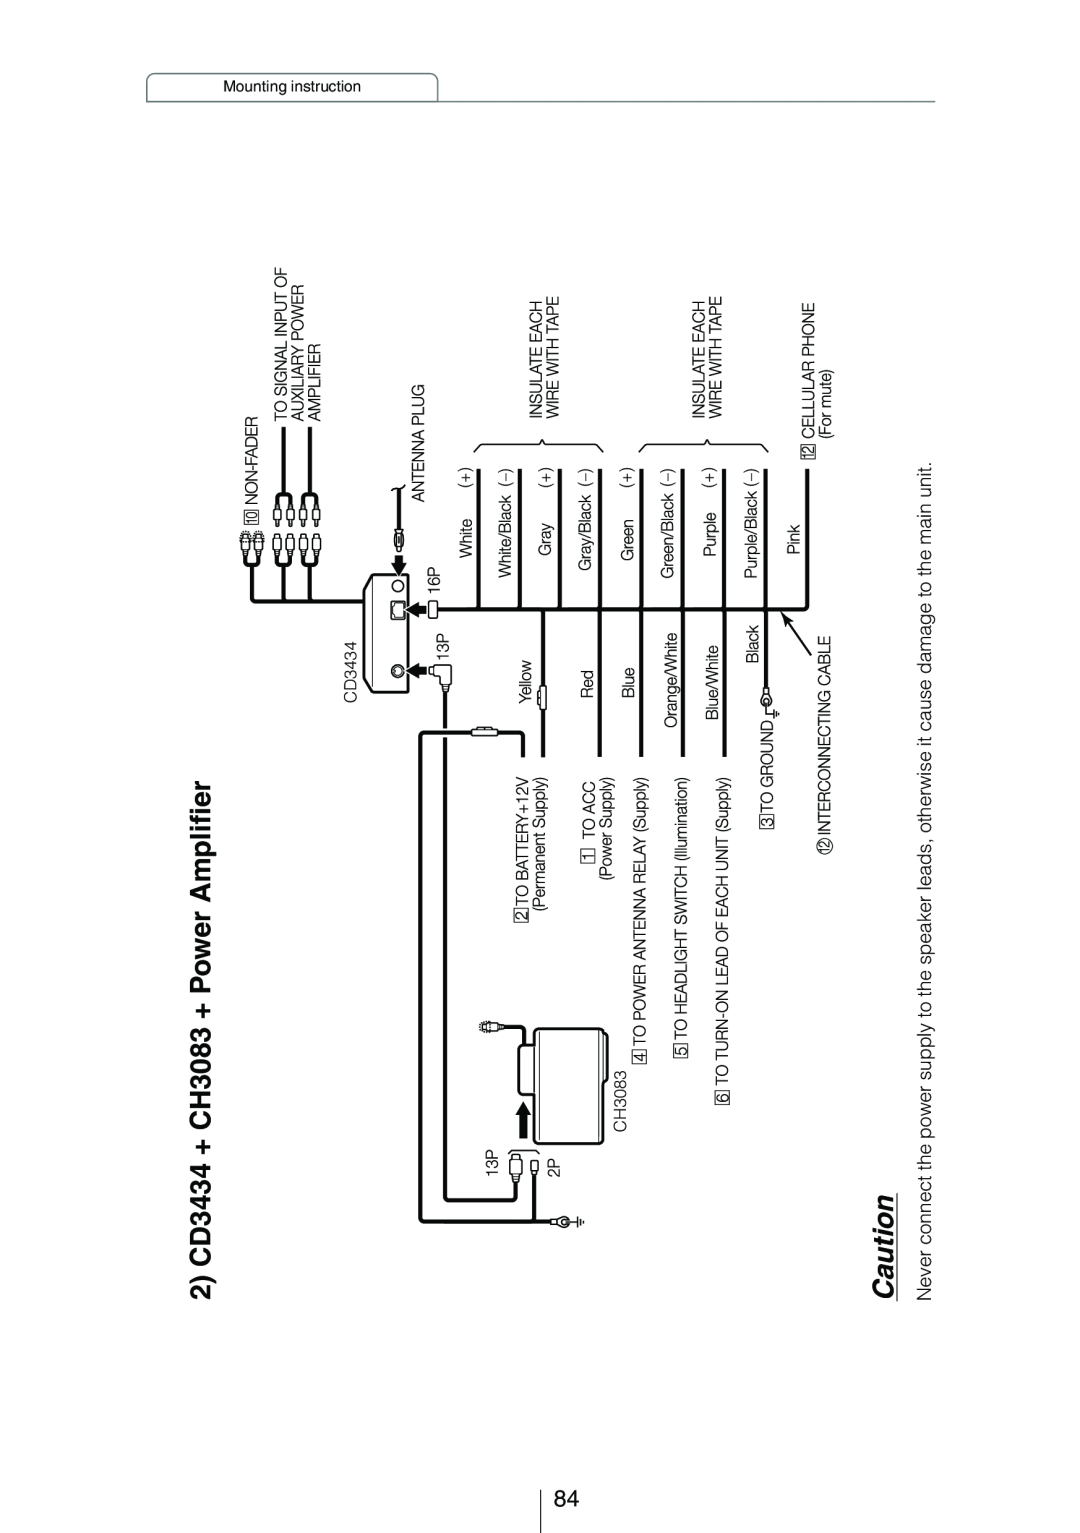 Eclipse - Fujitsu Ten owner manual 2 CD3434 + CH3083 + Power Amplifier, Mounting instruction 